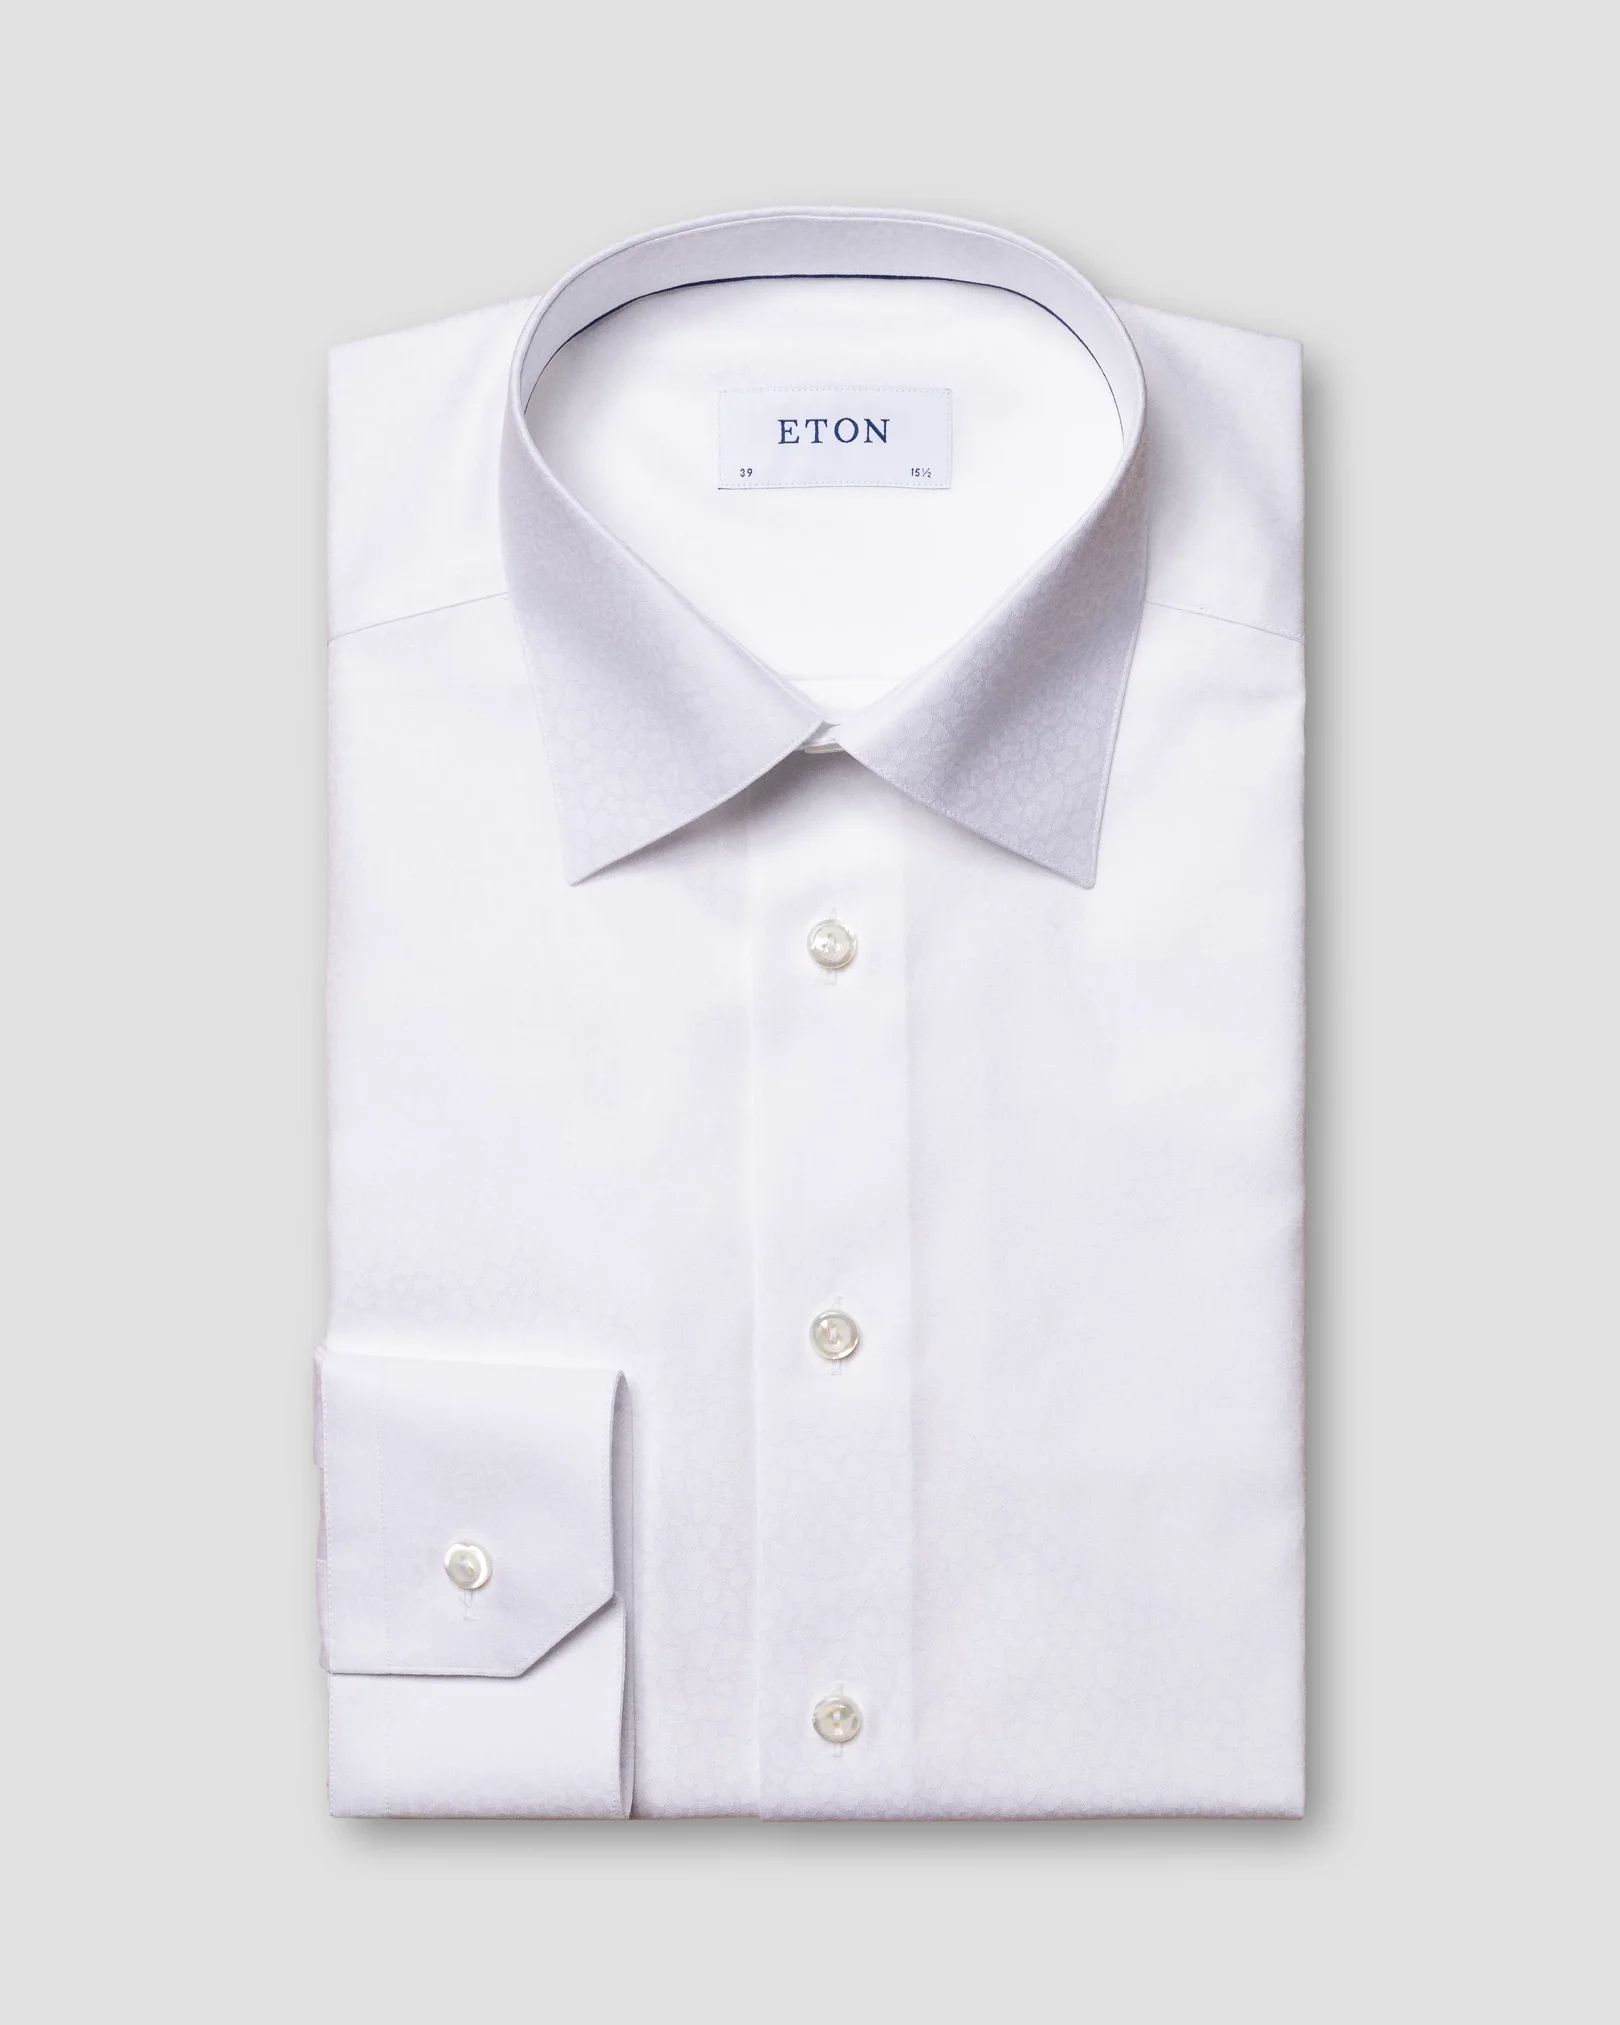 Eton - white leo jacquard shirt moderate cut away